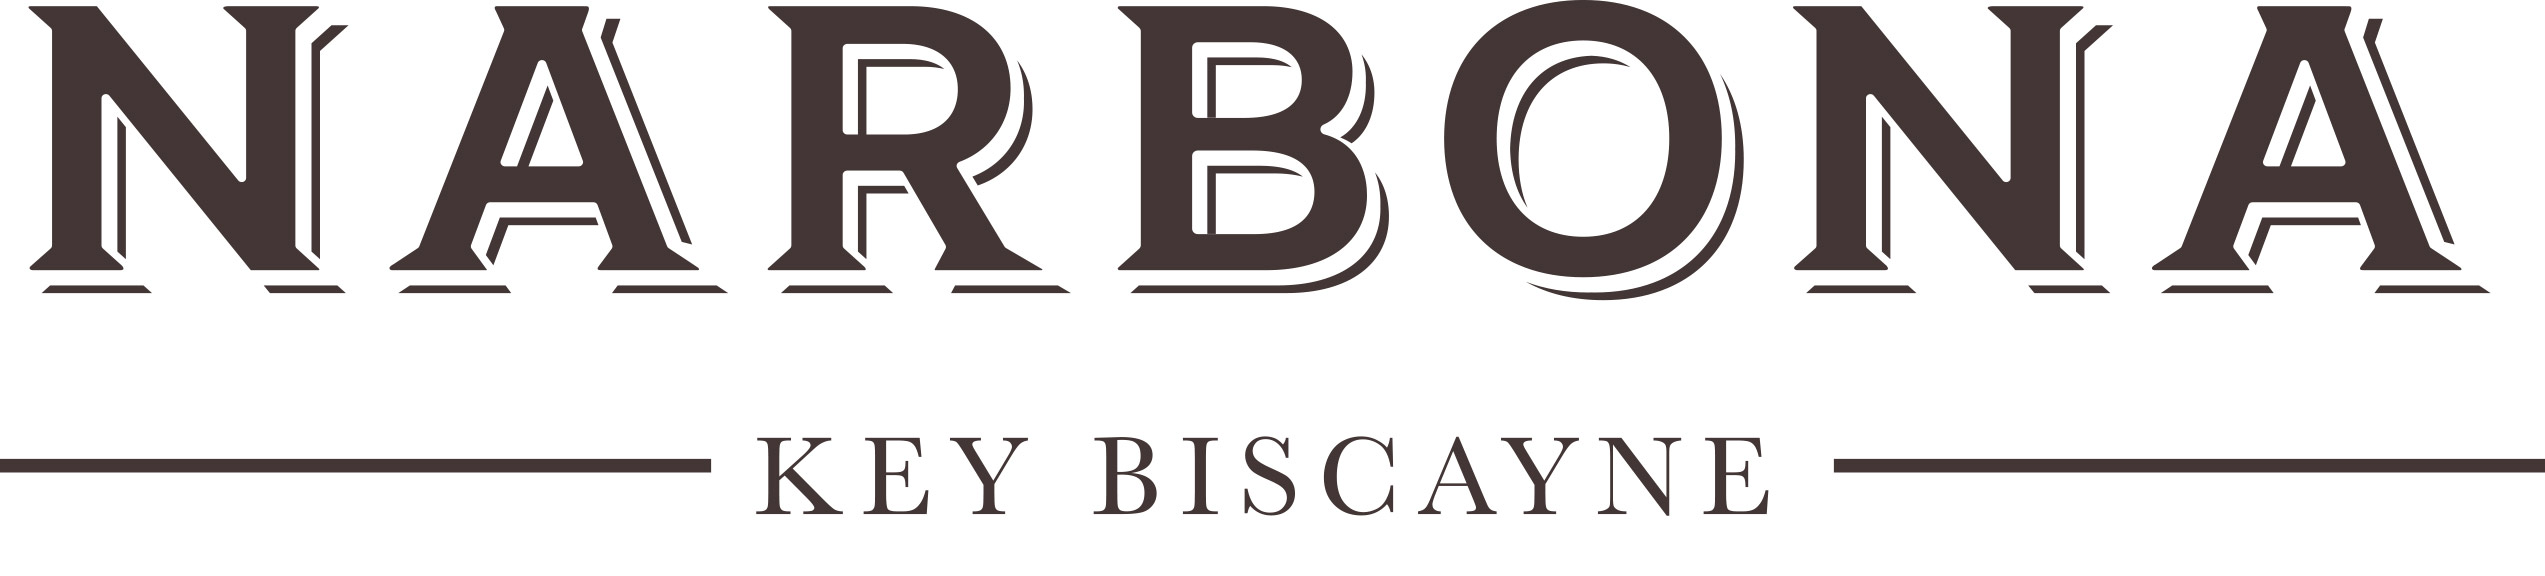 NARBONA Key Biscayne logo